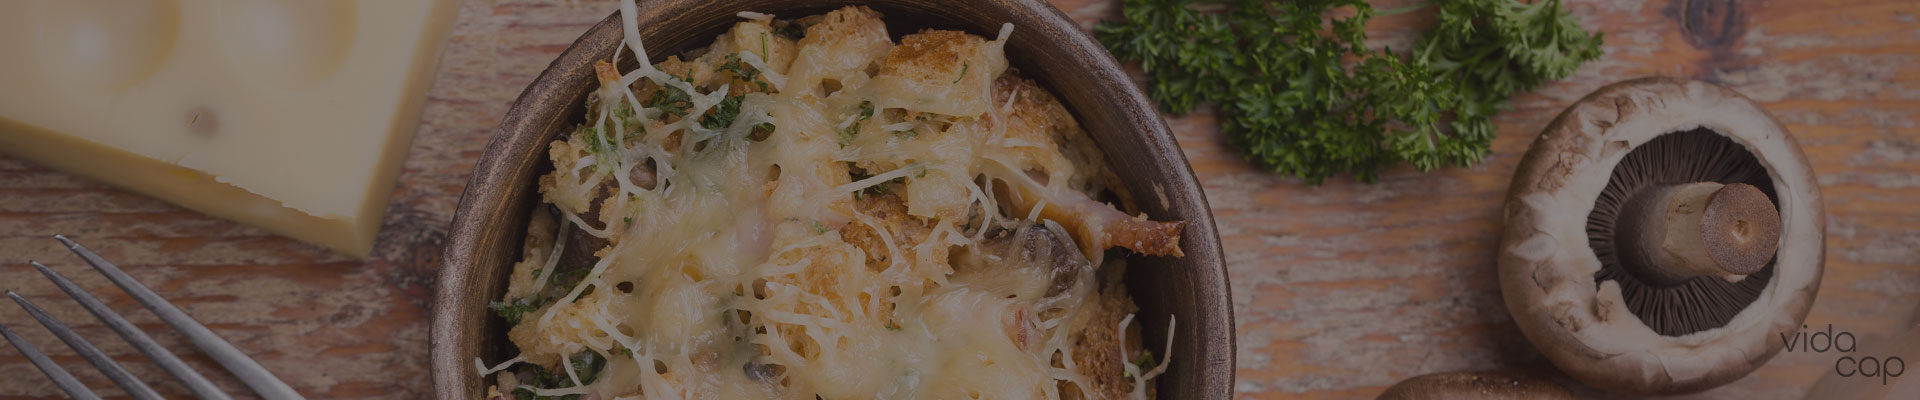 banner-cheese-and-mushroom-souffle-recipe